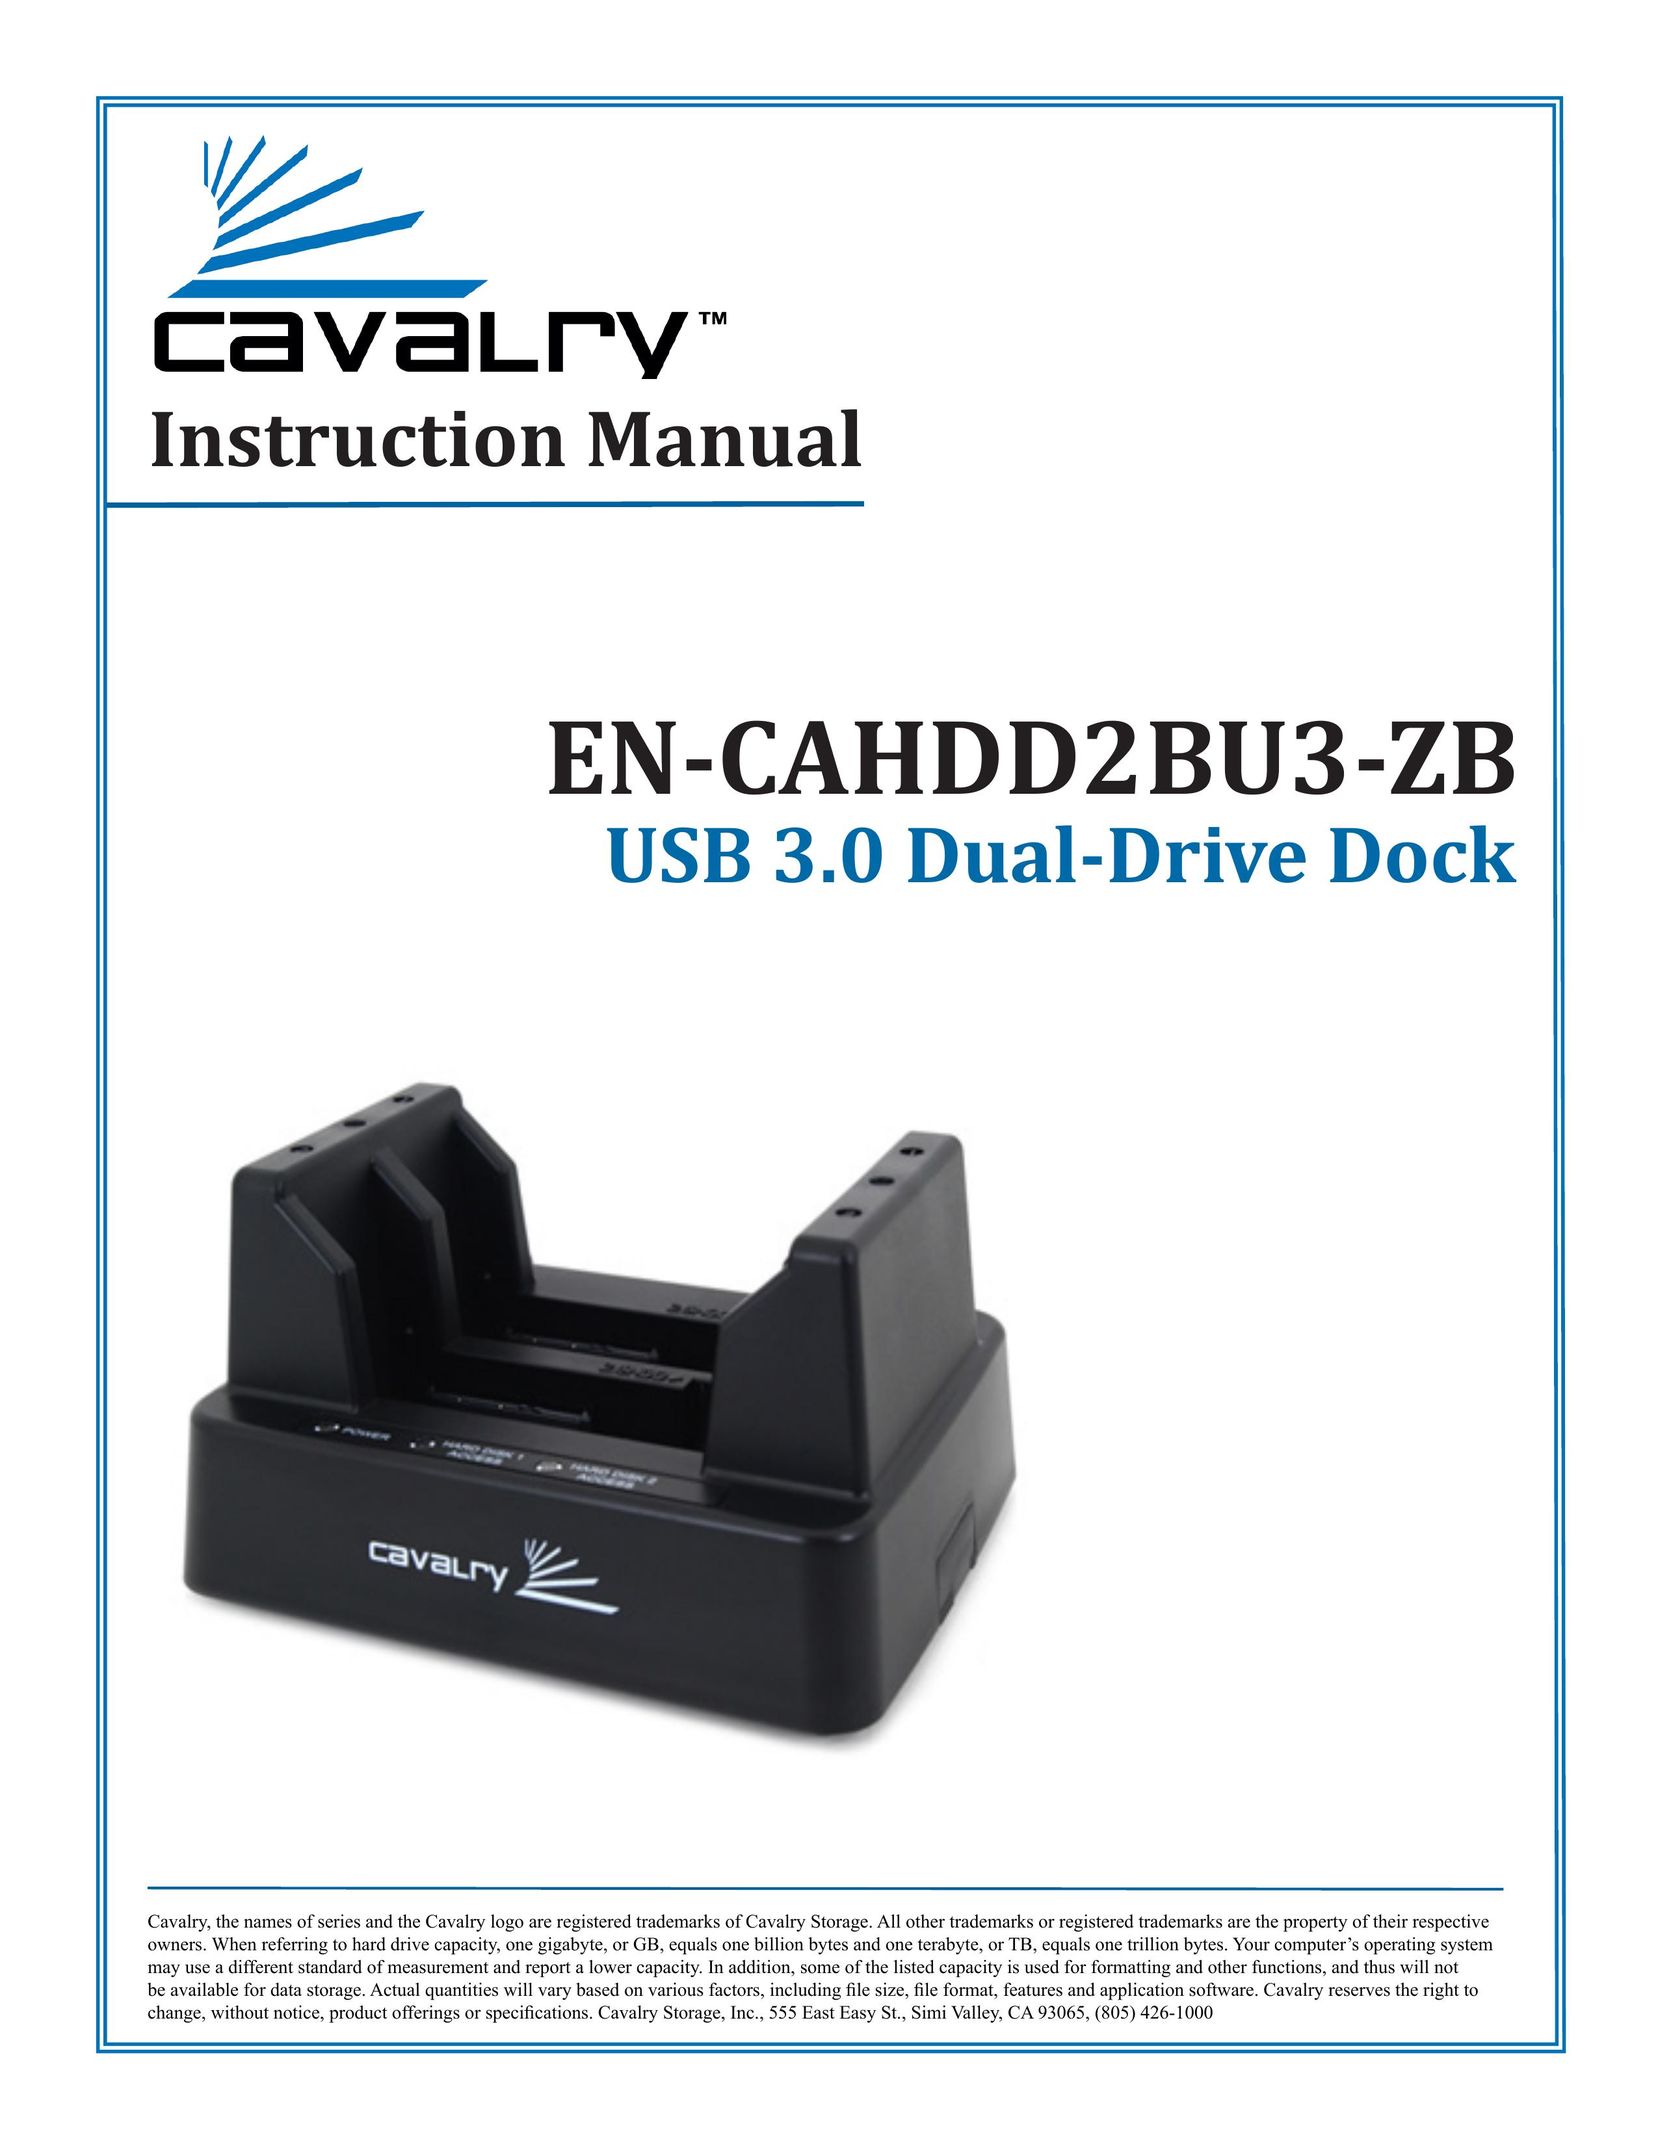 Cavalry Storage EN-CAHDD2BU3-ZB Computer Accessories User Manual